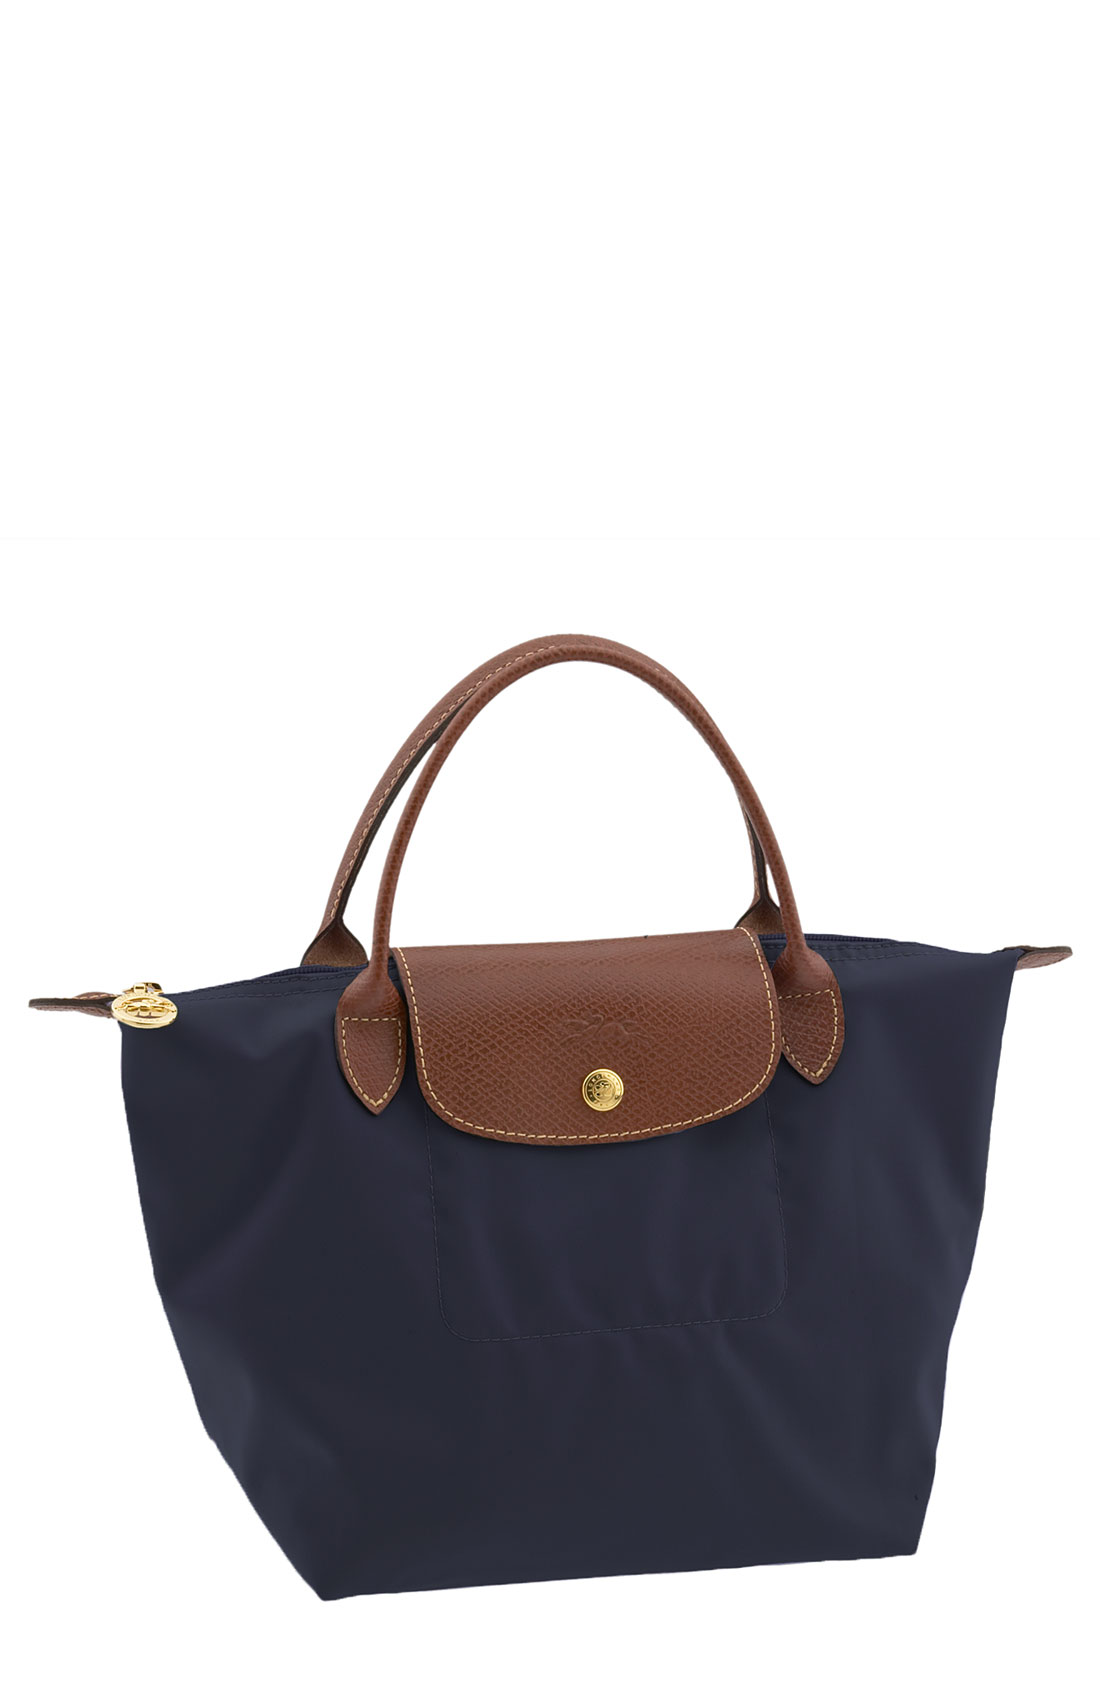 Longchamp 'Mini Le Pliage' Handbag in Blue (new navy) | Lyst